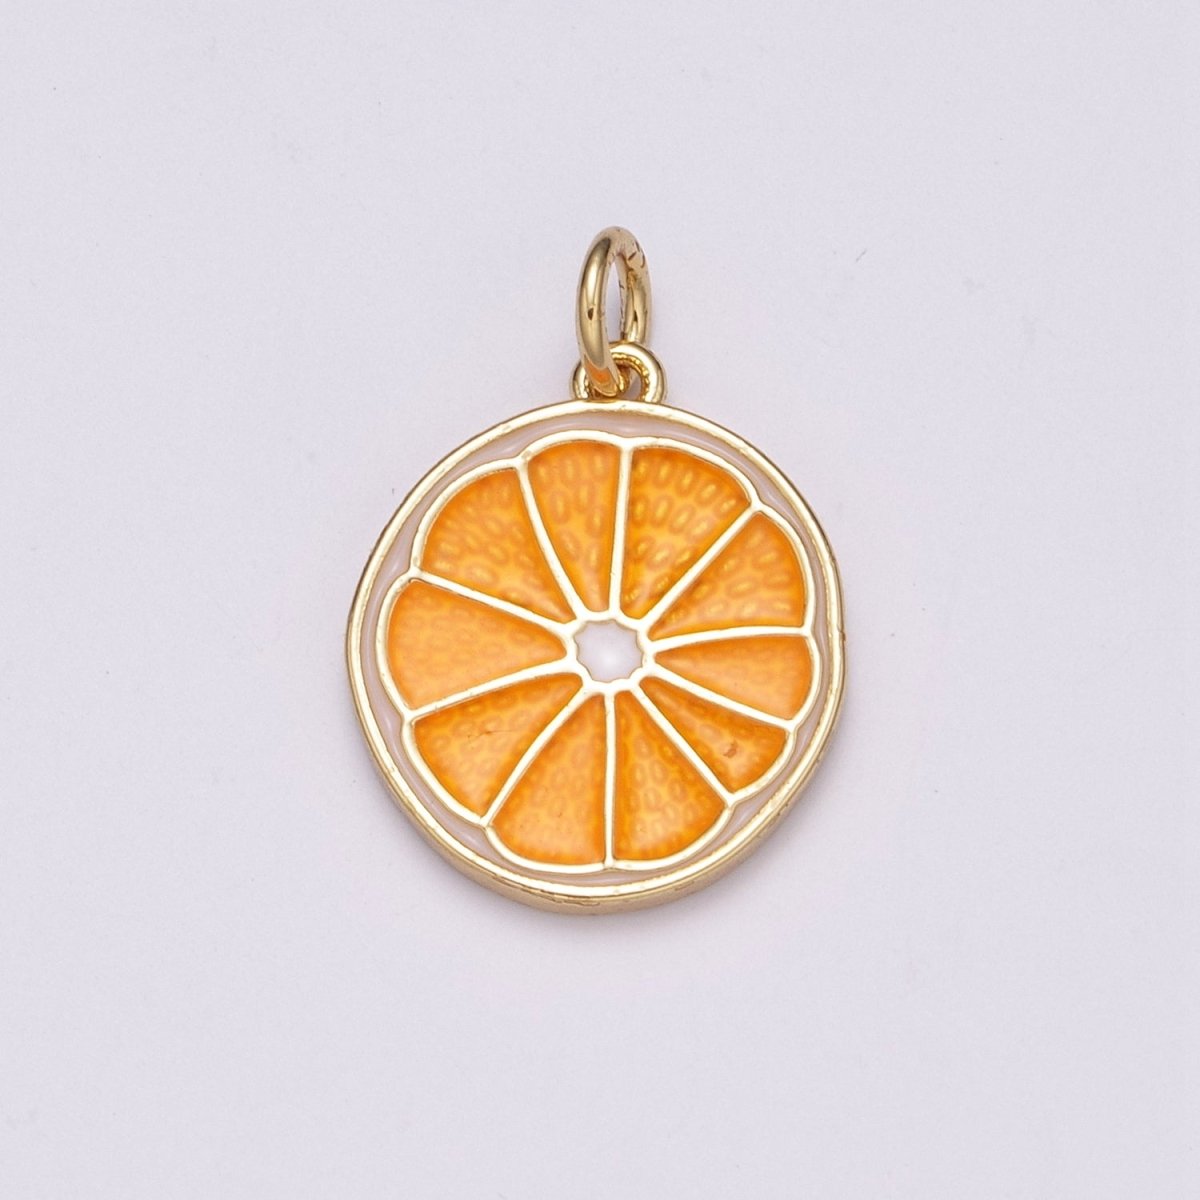 Enamel Orange Charm Fruit Pendant 14k Gold Filled Charm Bracelet Necklace Jewelry Finding, M-818- M-820 - DLUXCA